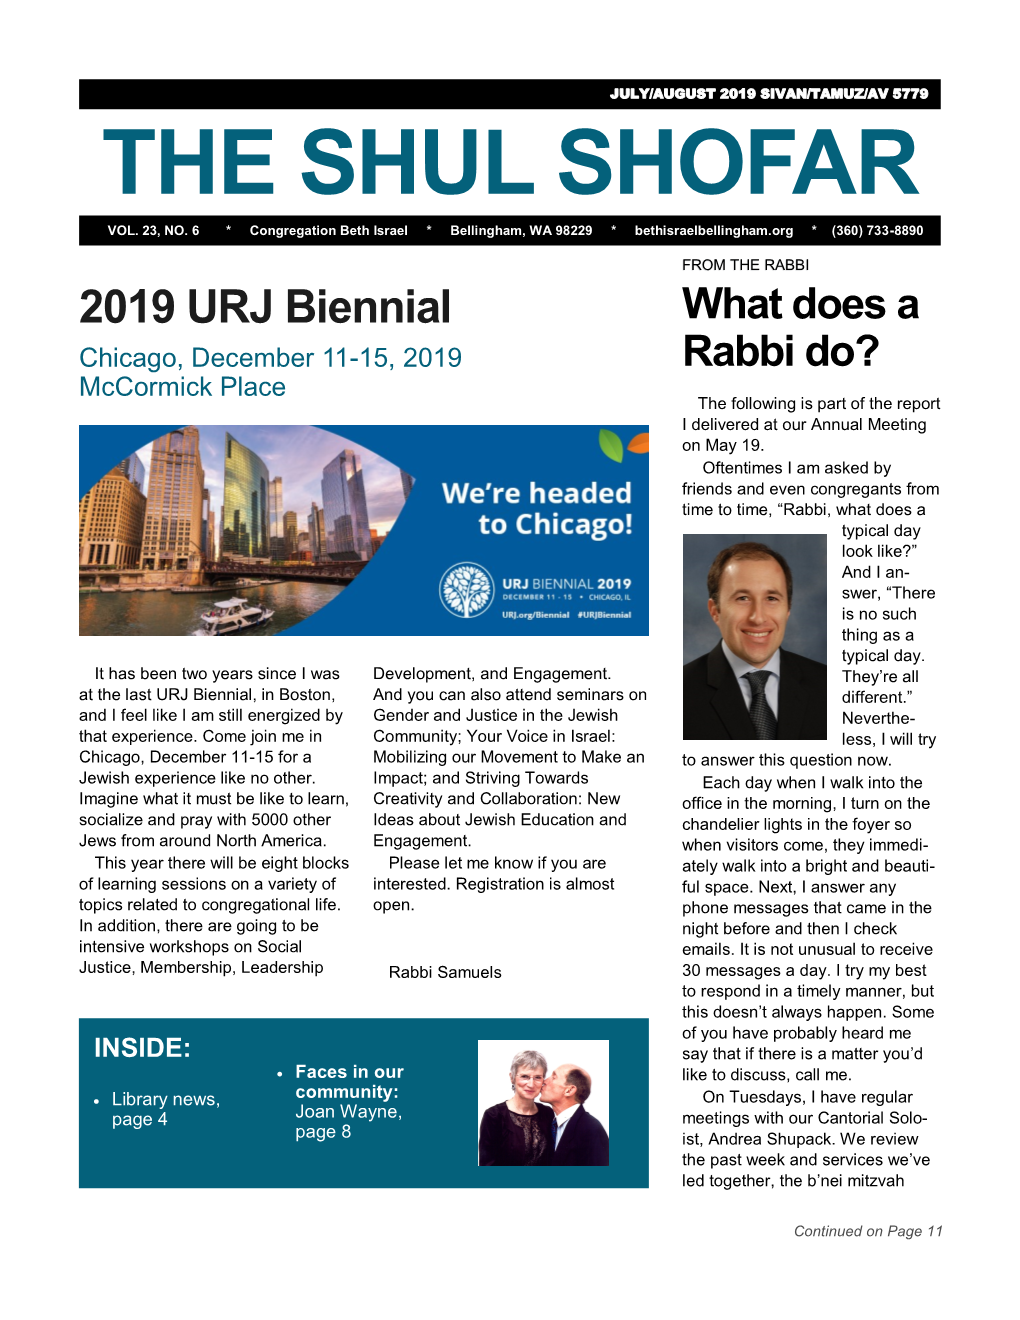 The Shul Shofar, July/August 2019